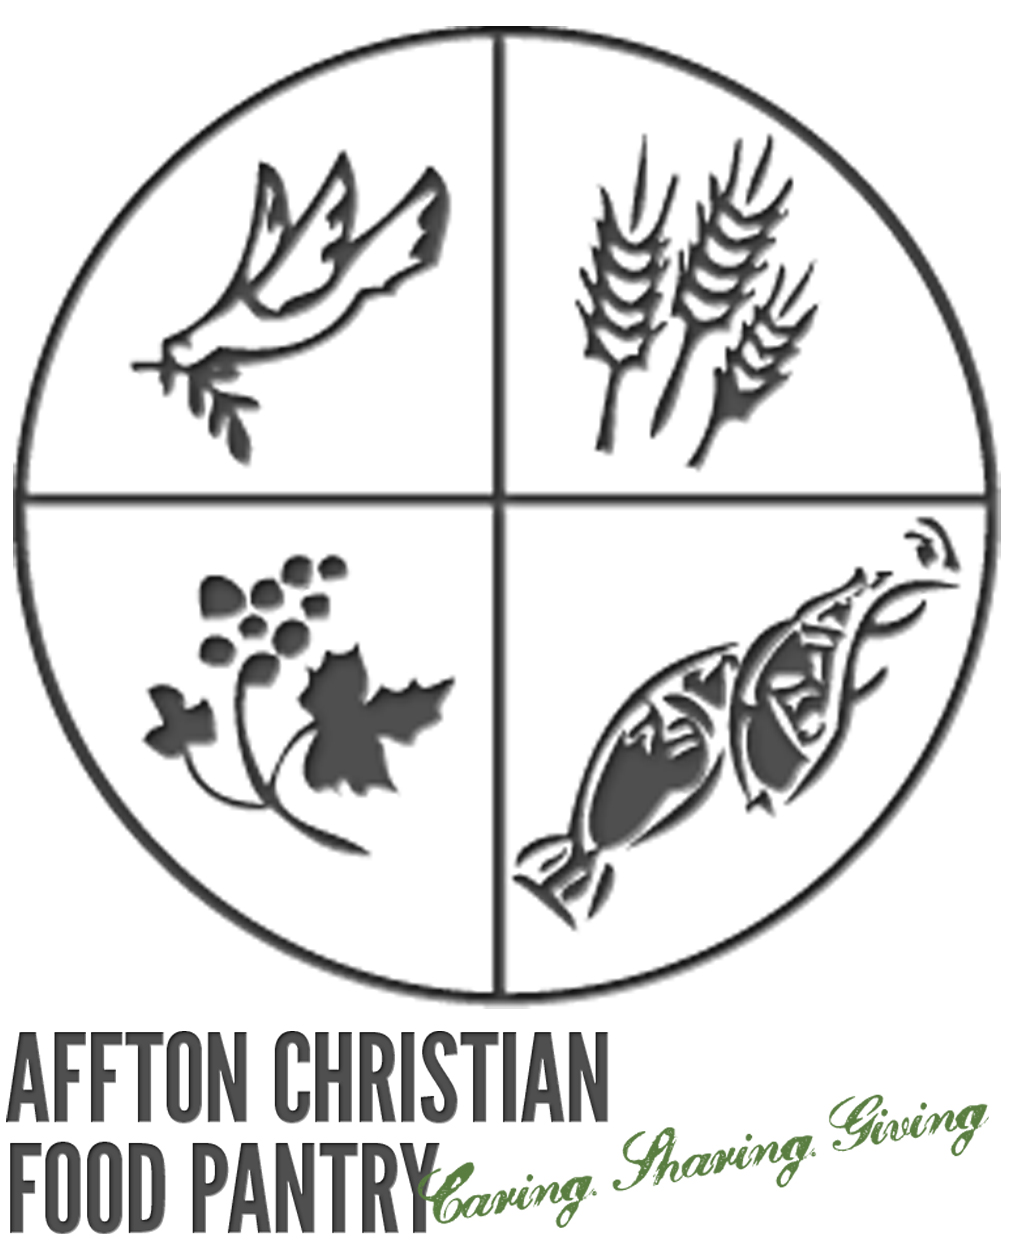 Affton Christian Food Pantry